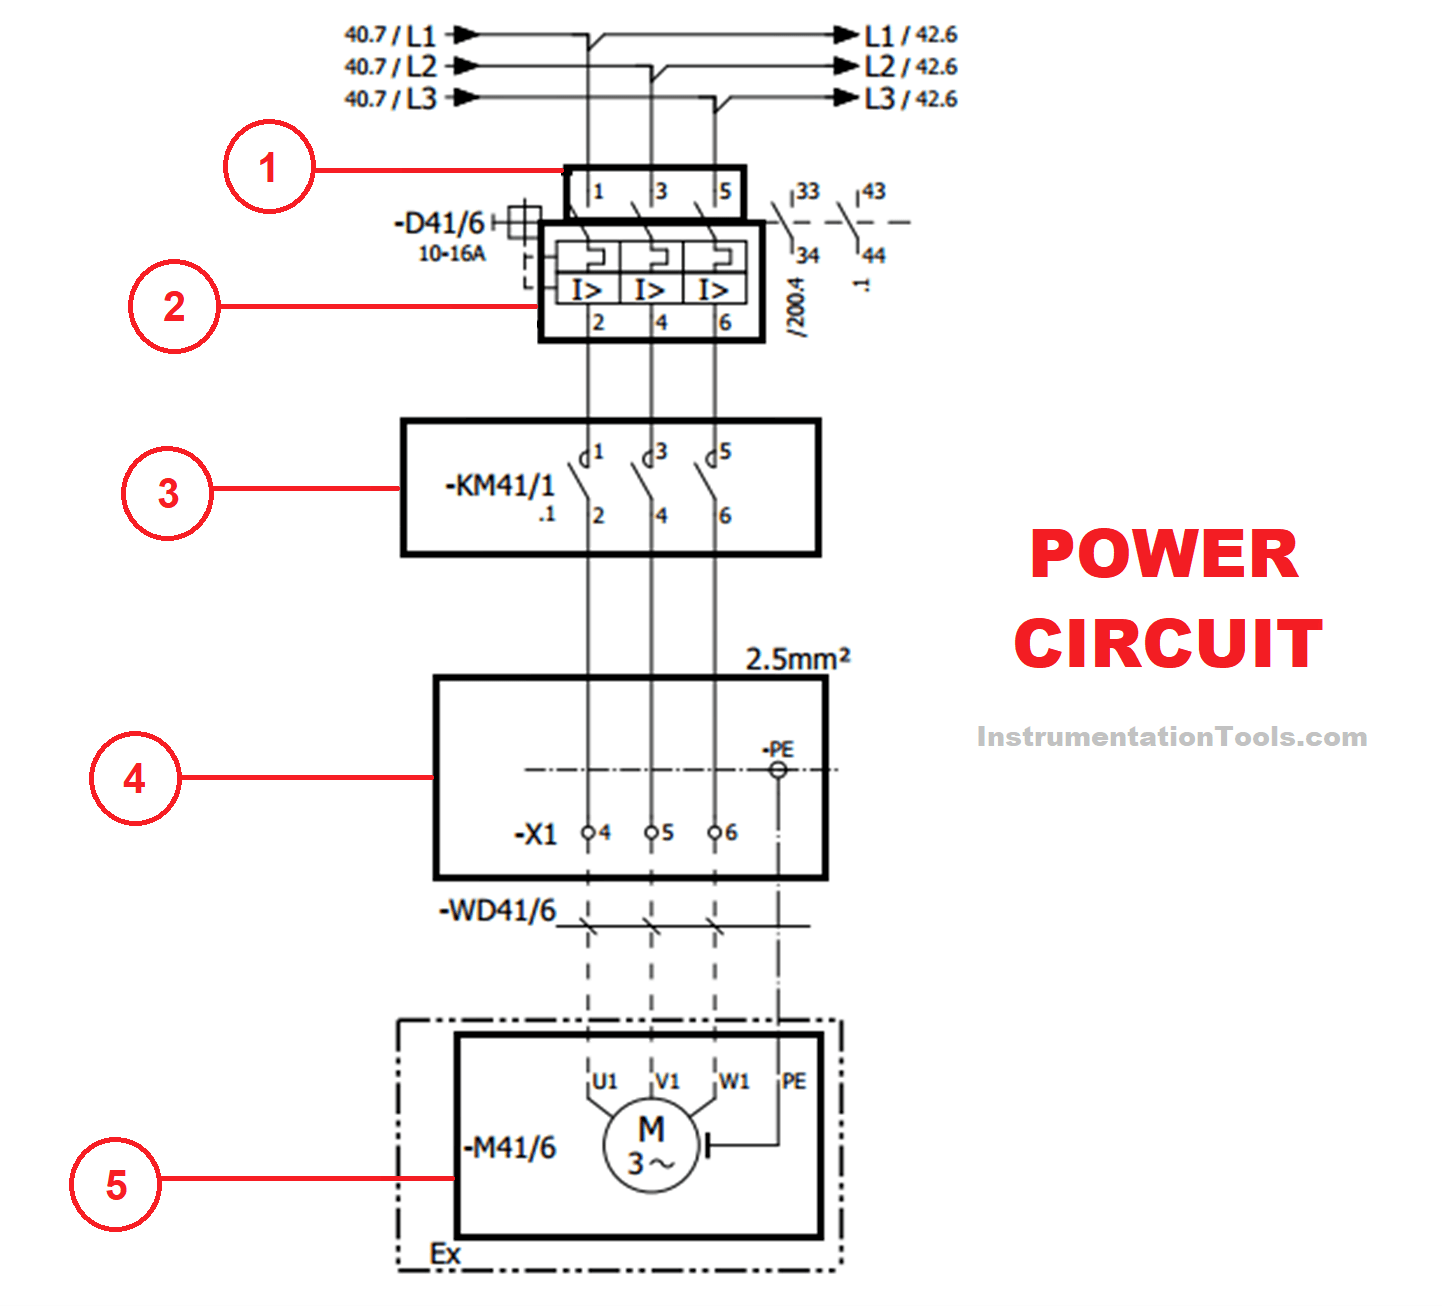 Power circuit diagram for the motor